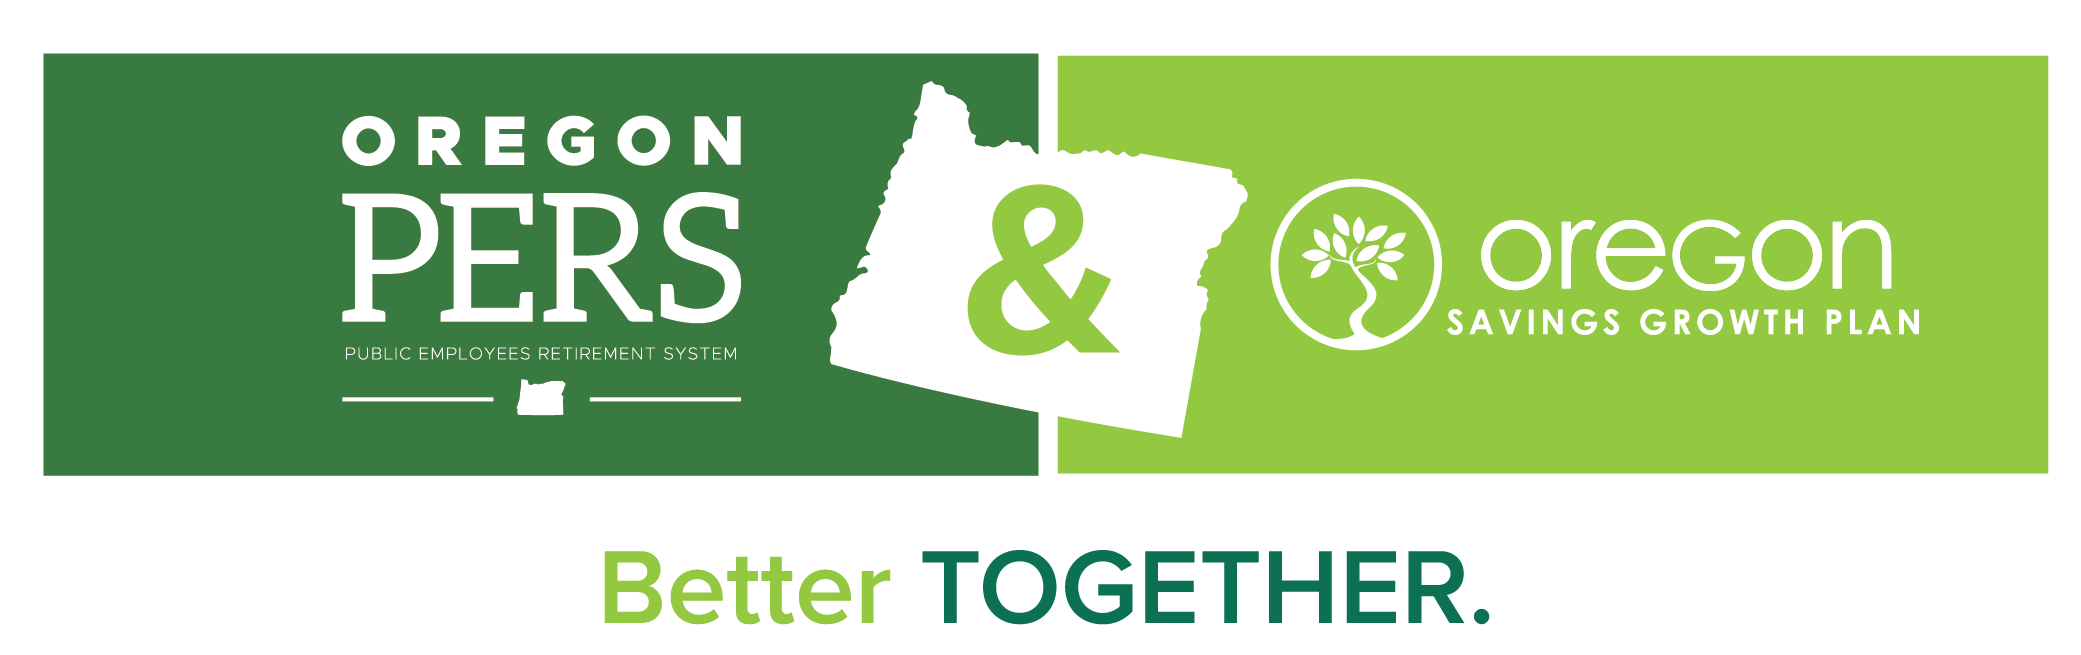 Oregon PERS & Oregon Savings Growth Plan Better Together